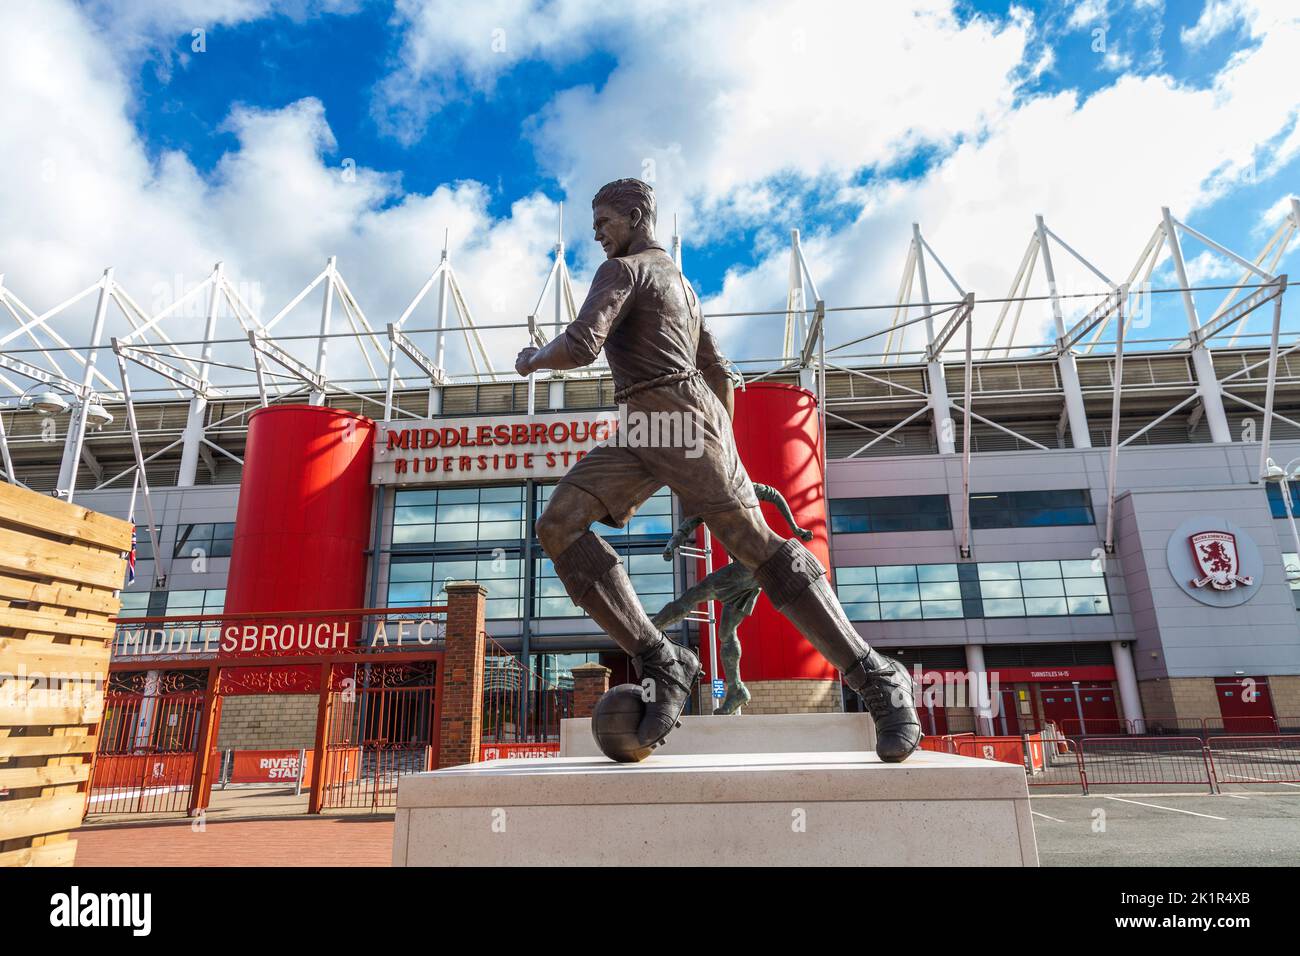 Middlesbrough Football Club's Riverside Stadium ,England,UK.Statue of Boro legend, George Camsell,goalscorer. Stock Photo